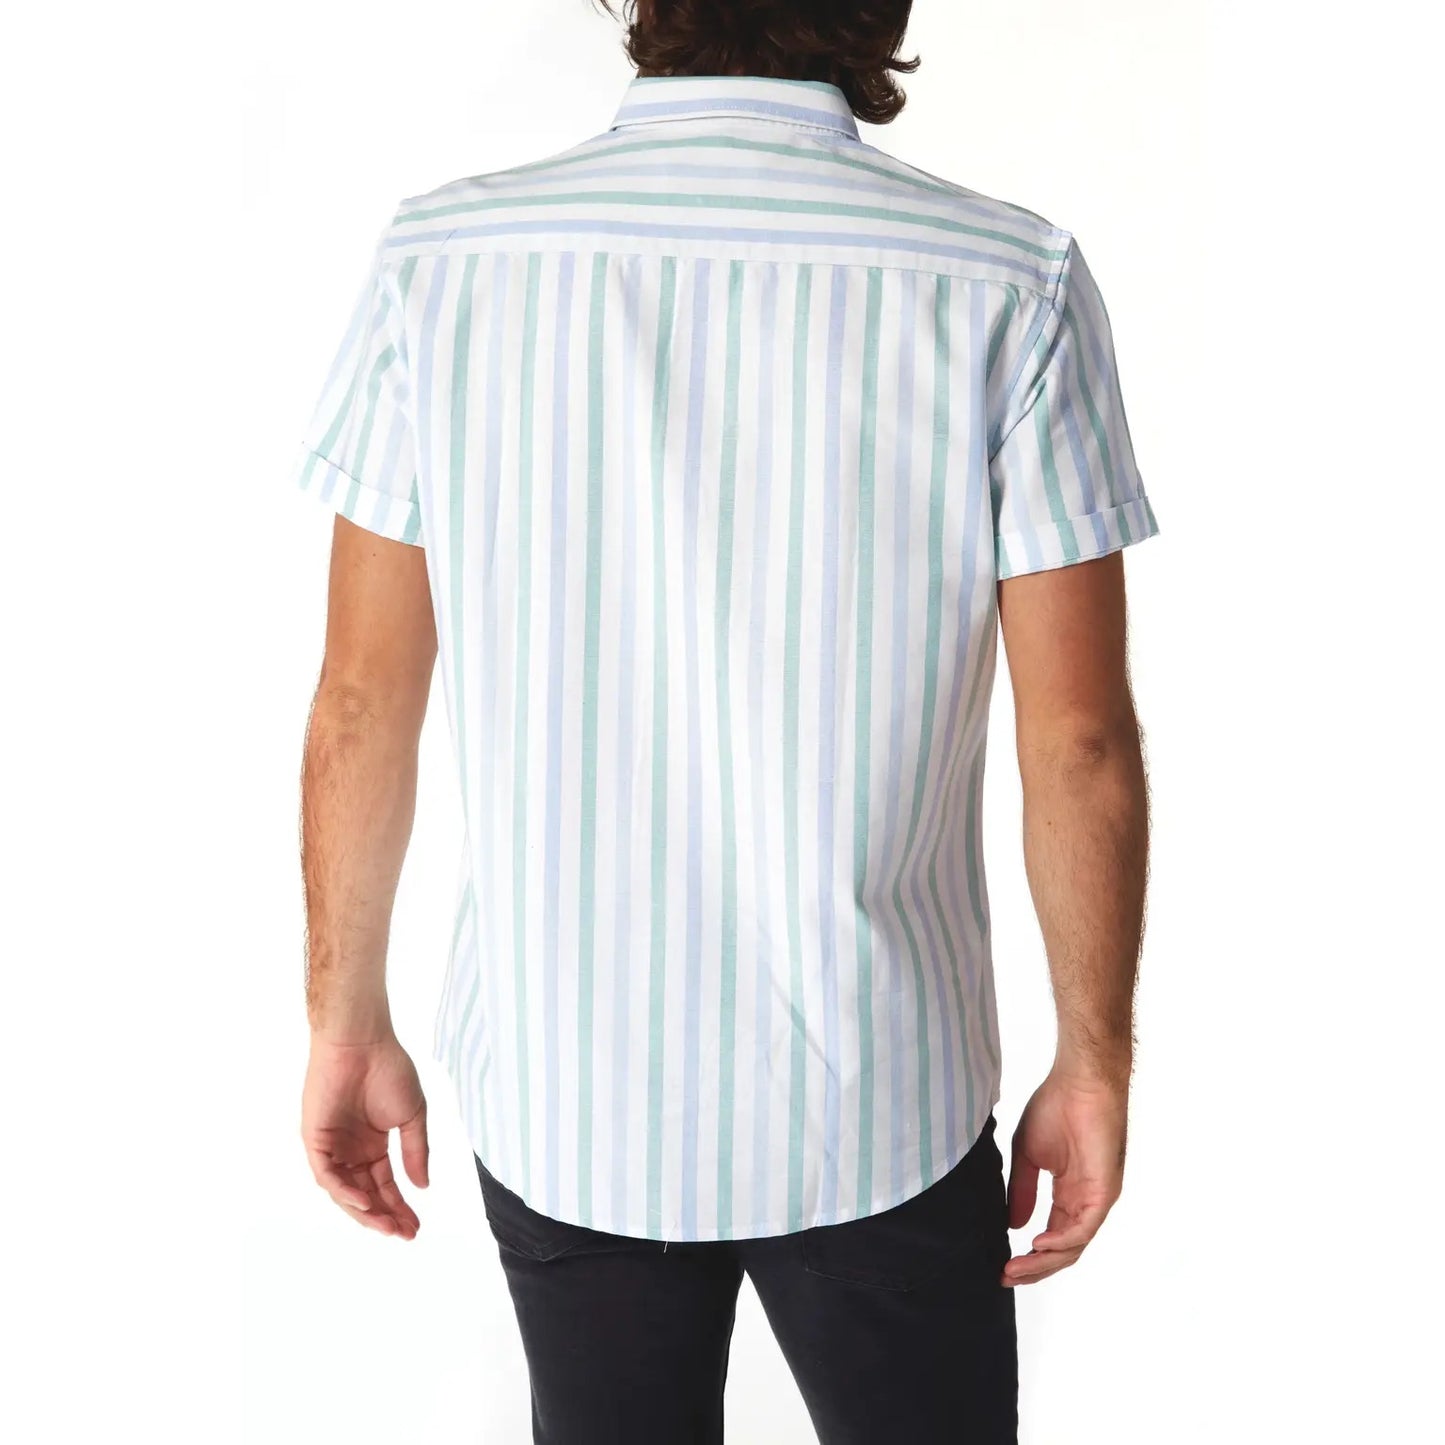 Martin Vertical Striped Shirt - Milo & Lily Boutique